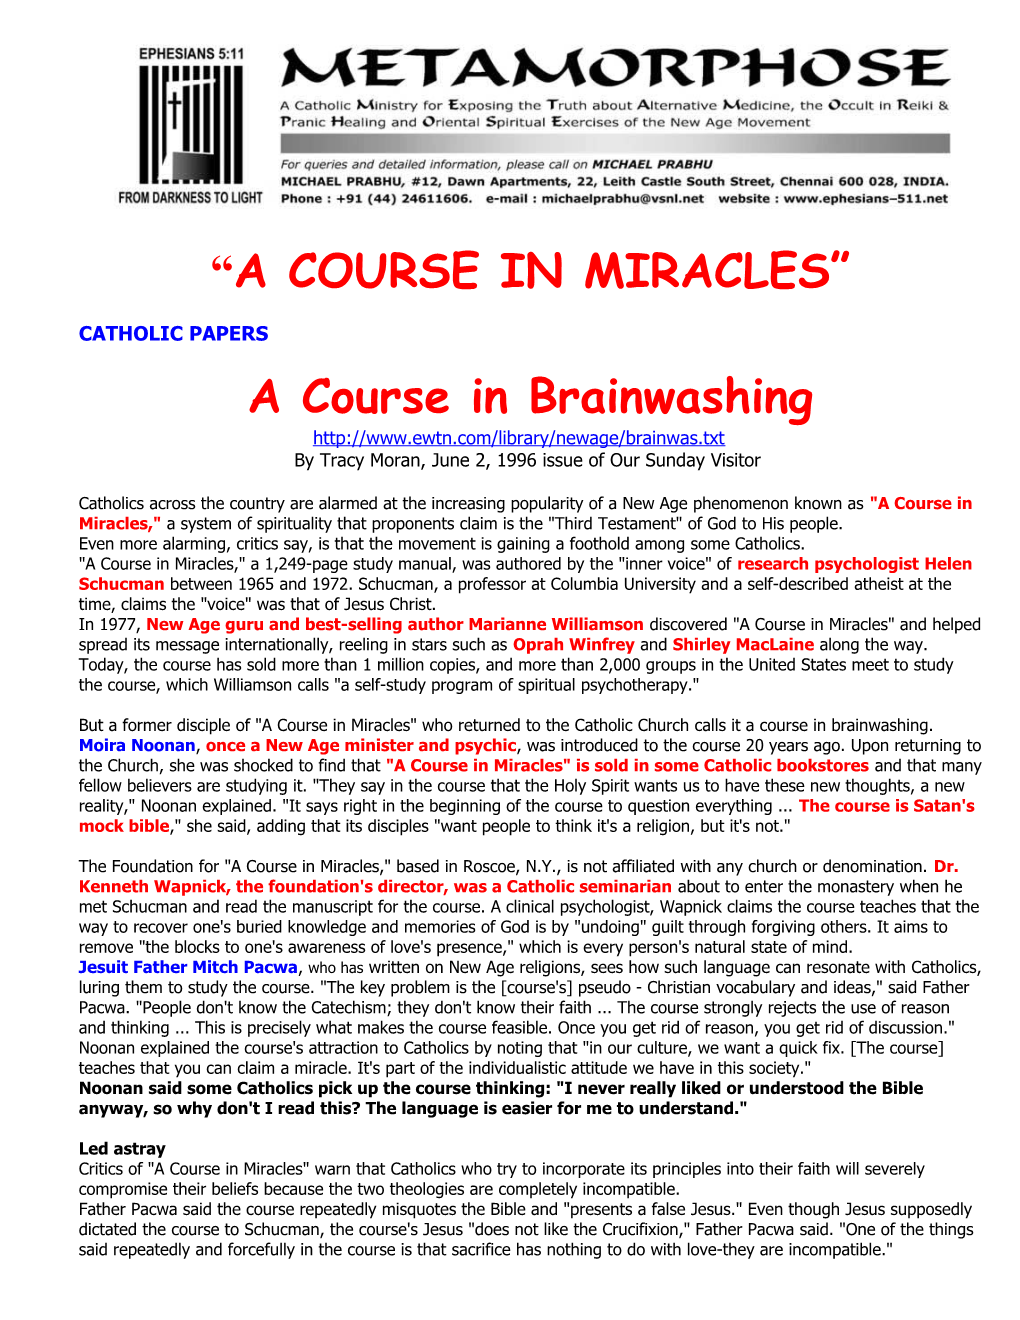 A Course in Brainwashing